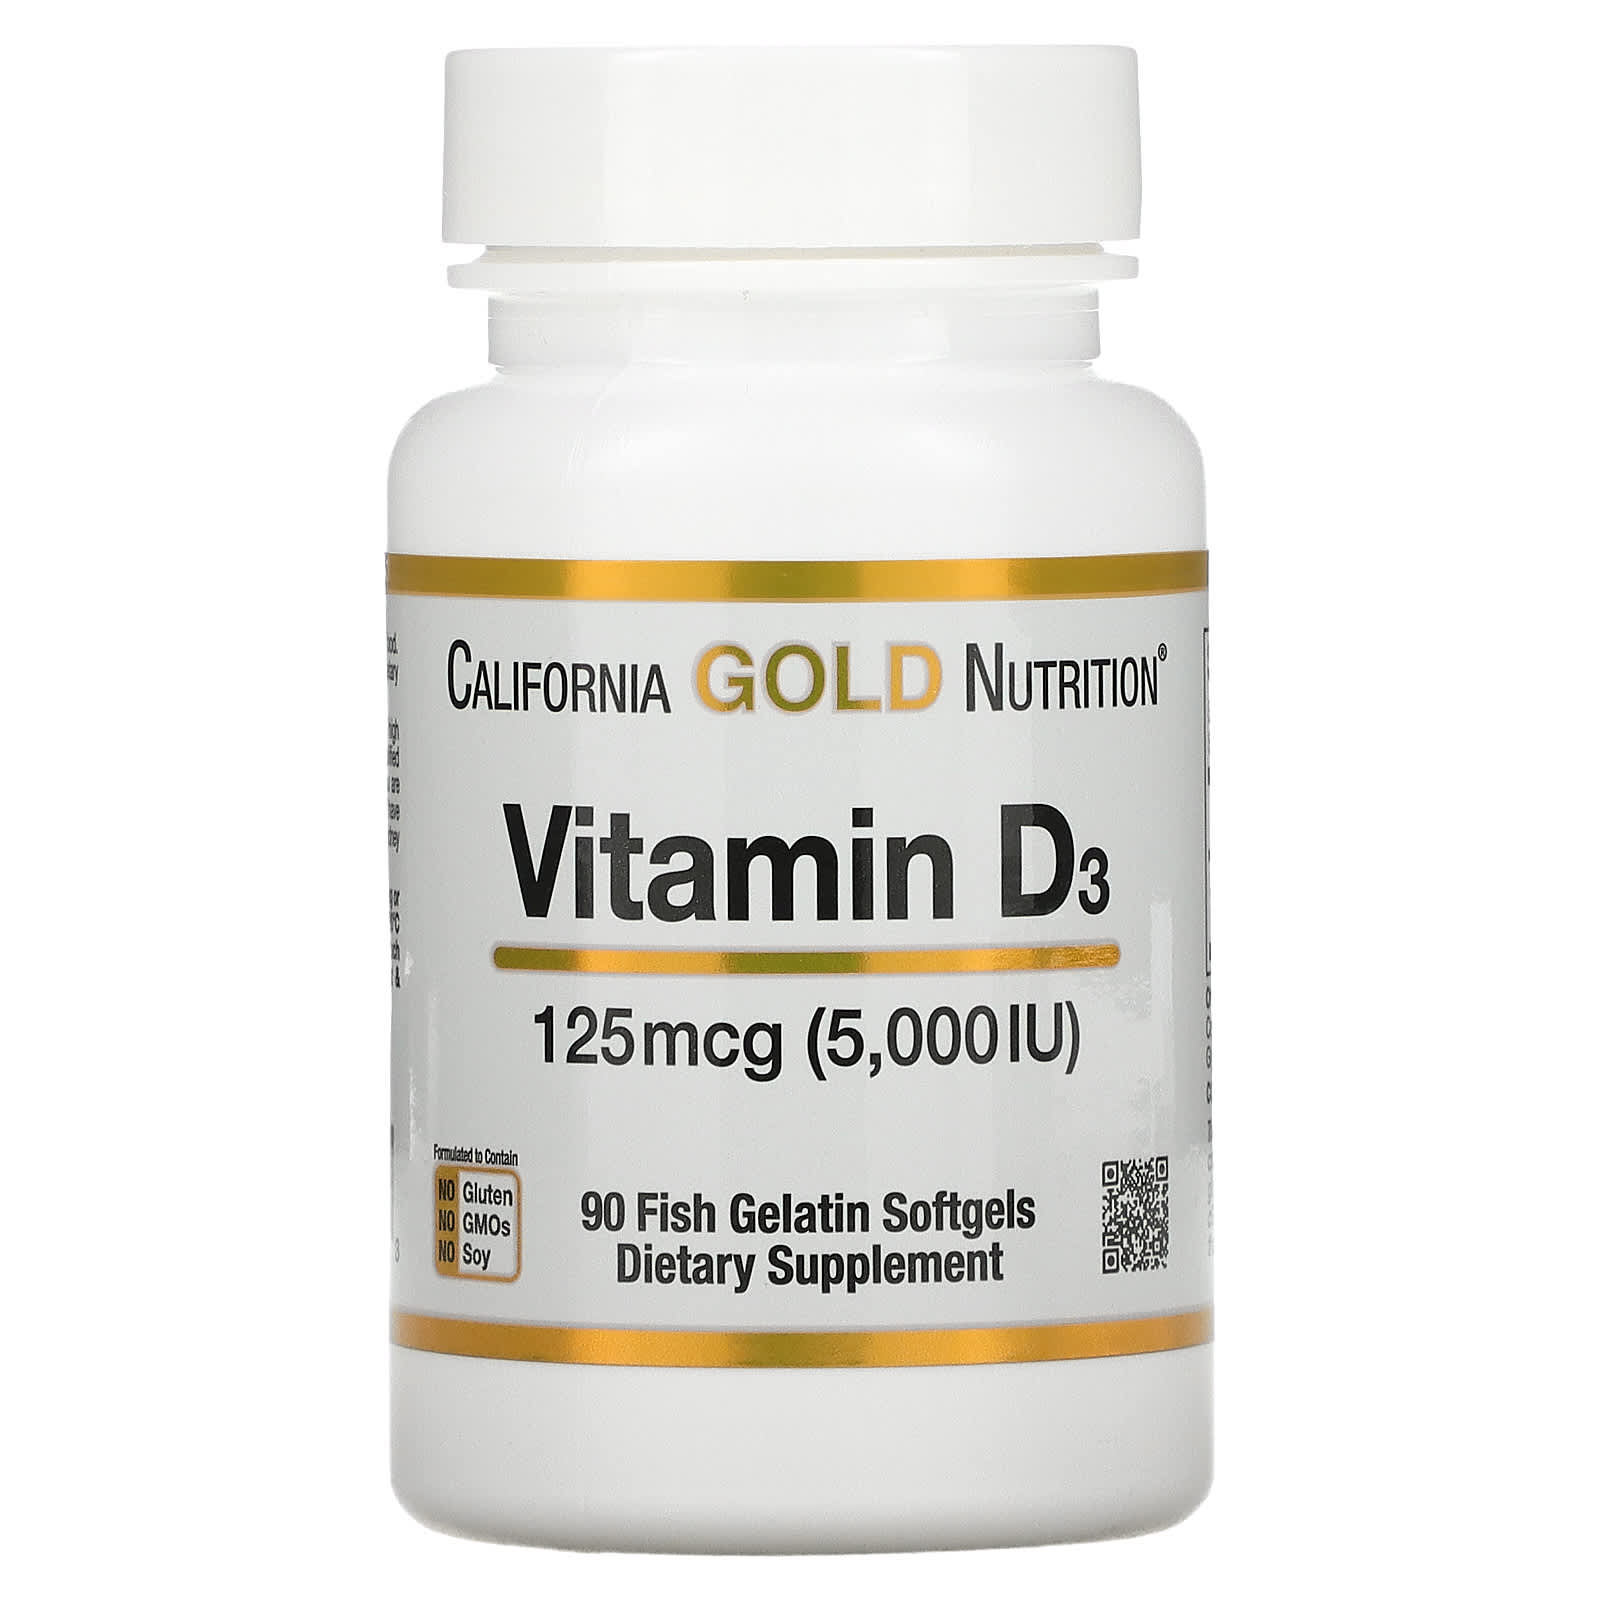 California Gold Nutrition, витаминD3, 125мкг (5000МЕ), 90капсул из рыбьего желатина